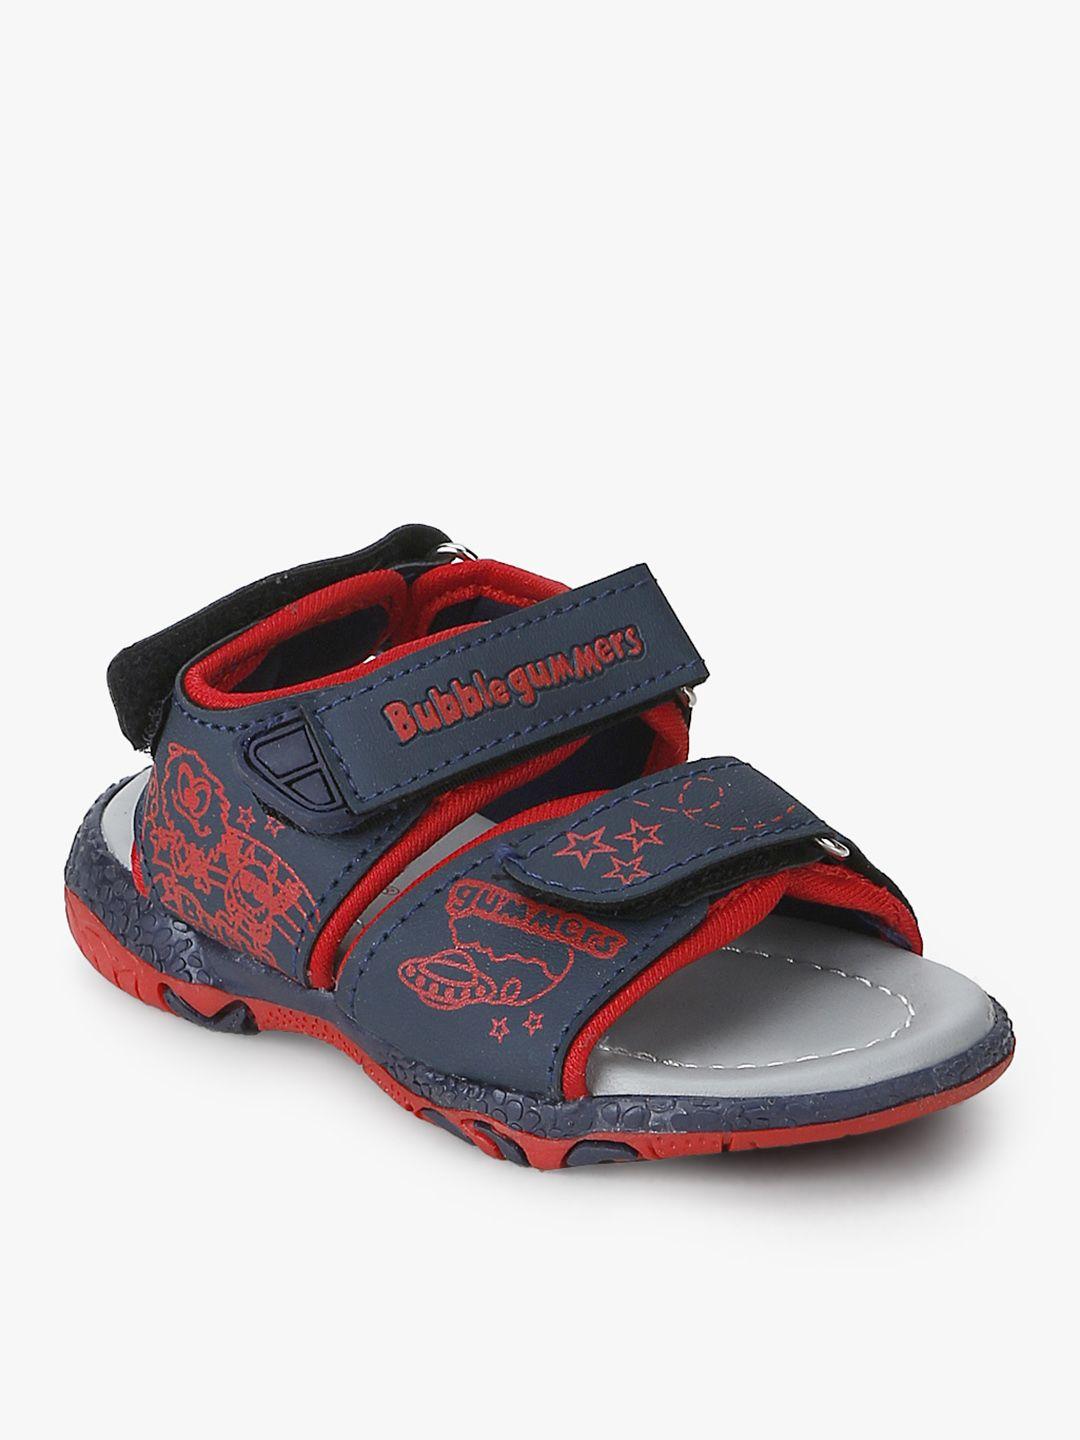 bubblegummers boys navy blue & red sports sandals